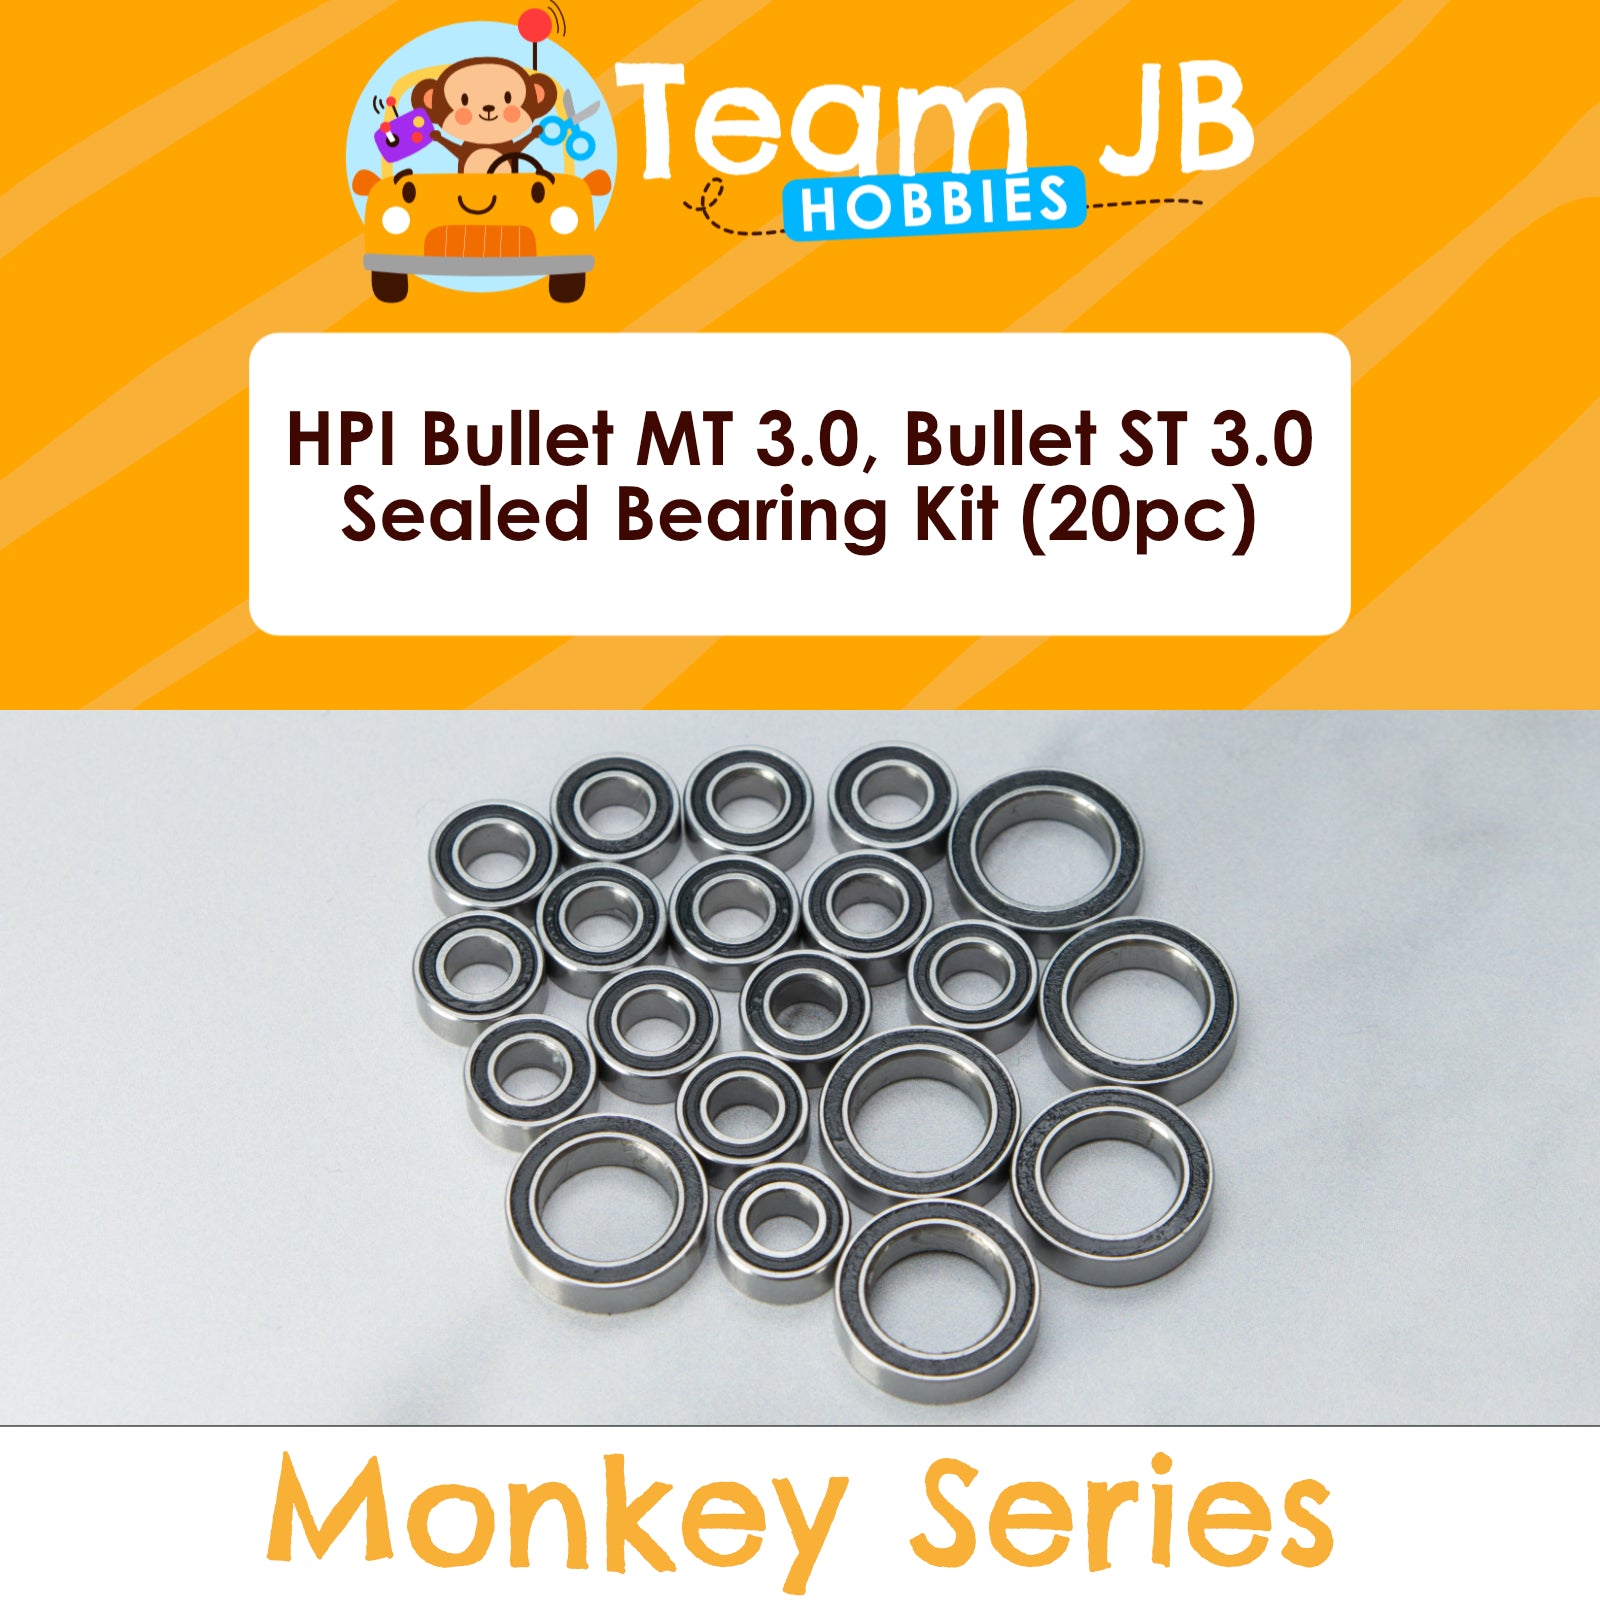 HPI Bullet MT 3.0, Bullet ST 3.0 - Sealed Bearing Kit